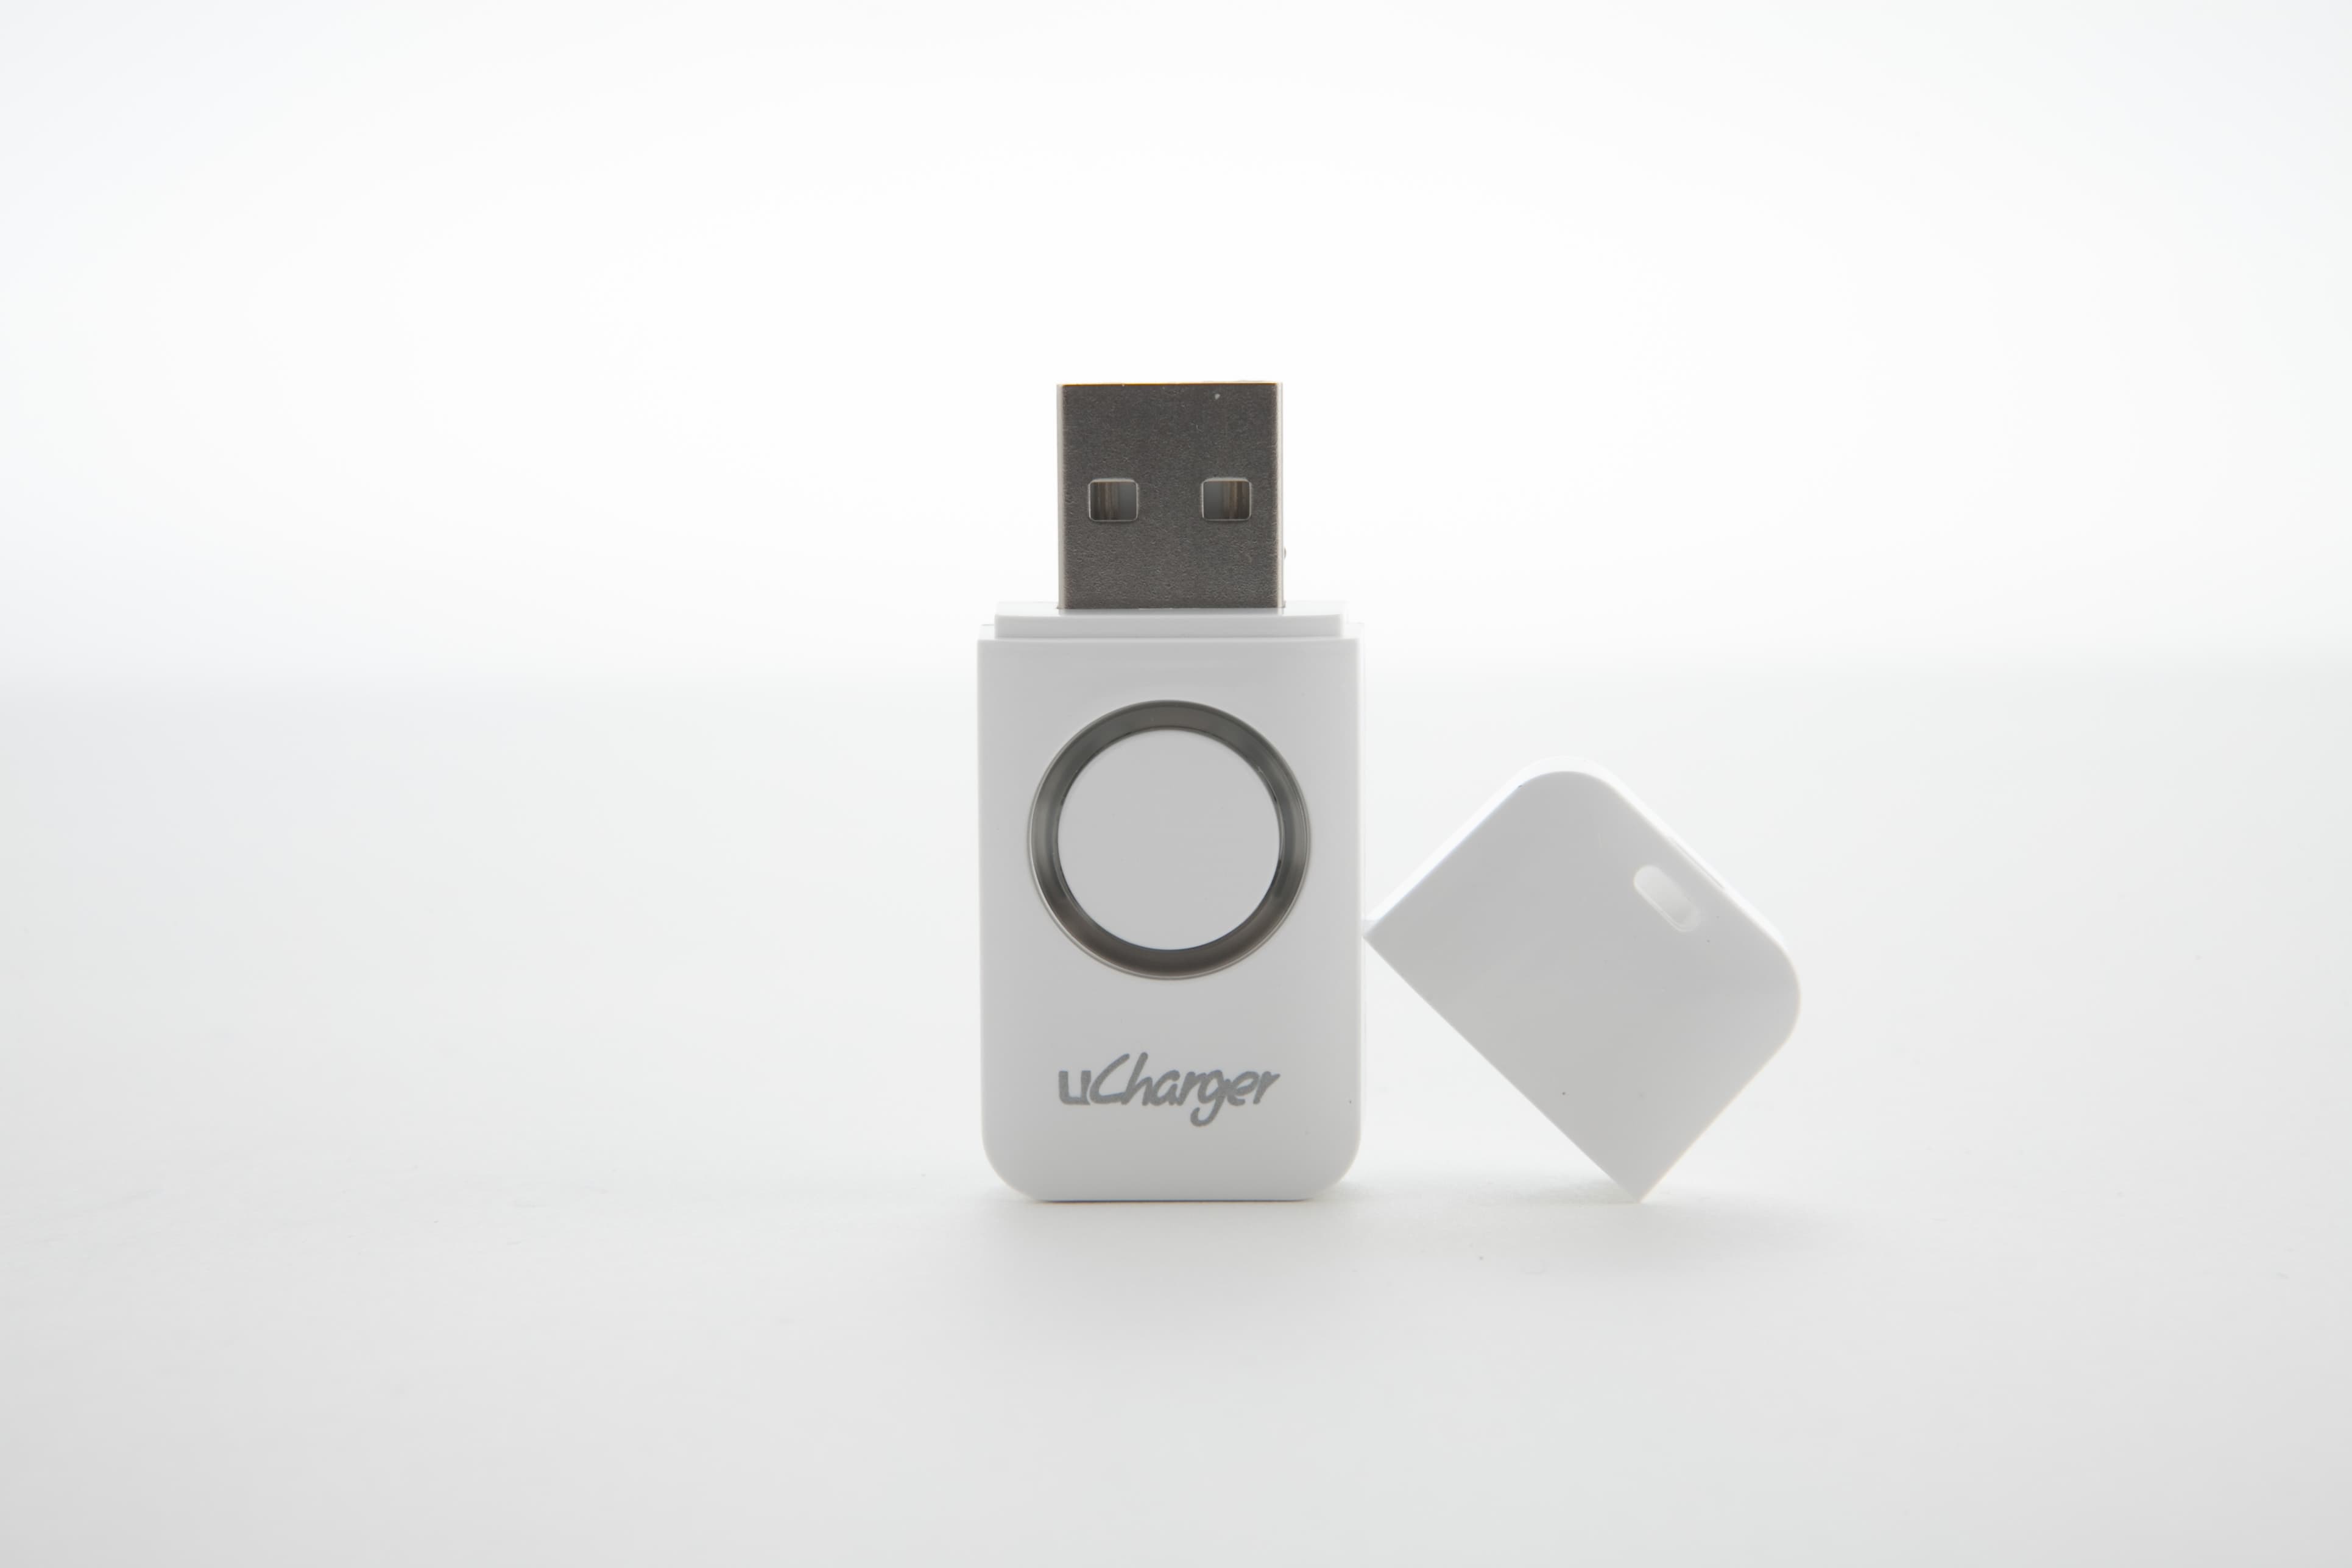 USB Fast Charger Adaptor- Fast charging via USB PC Port_ Smardirect